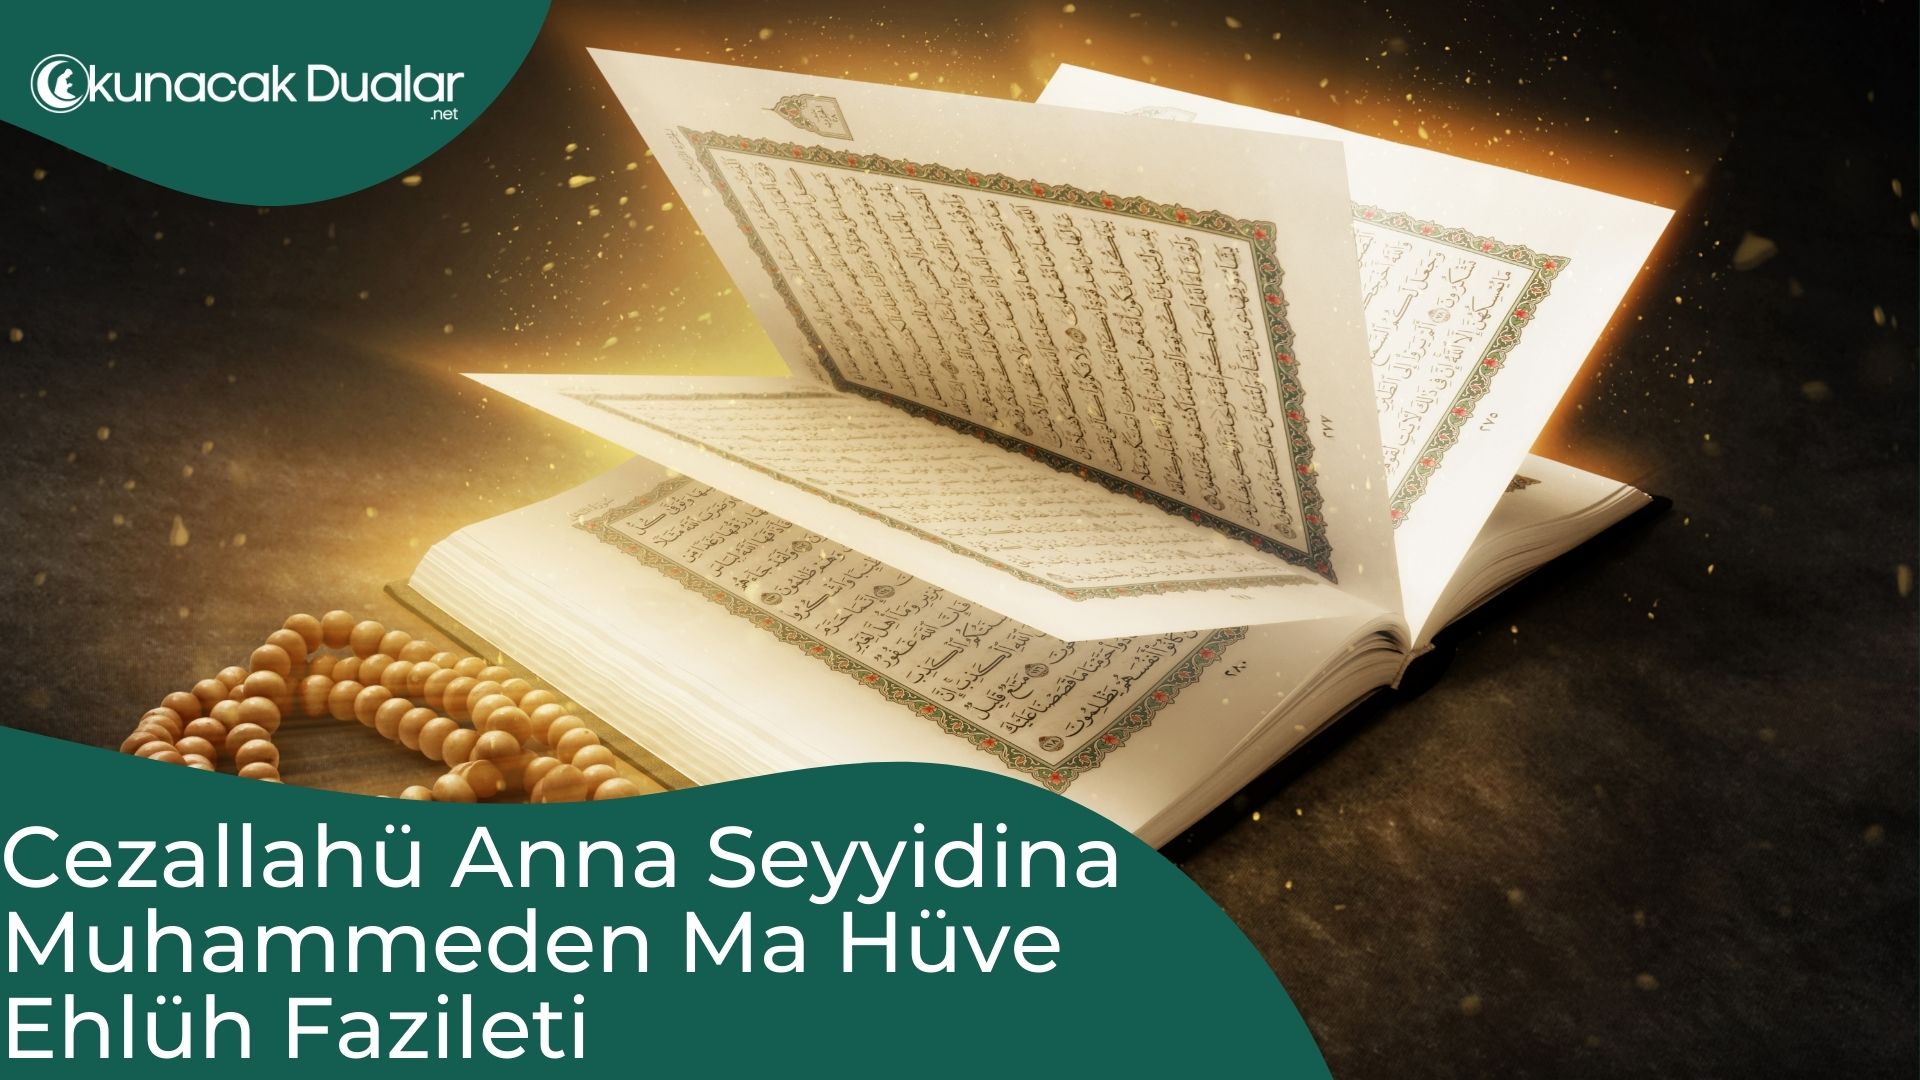 Cezallahü Anna Seyyidina Muhammeden Ma Hüve Ehlüh Fazileti